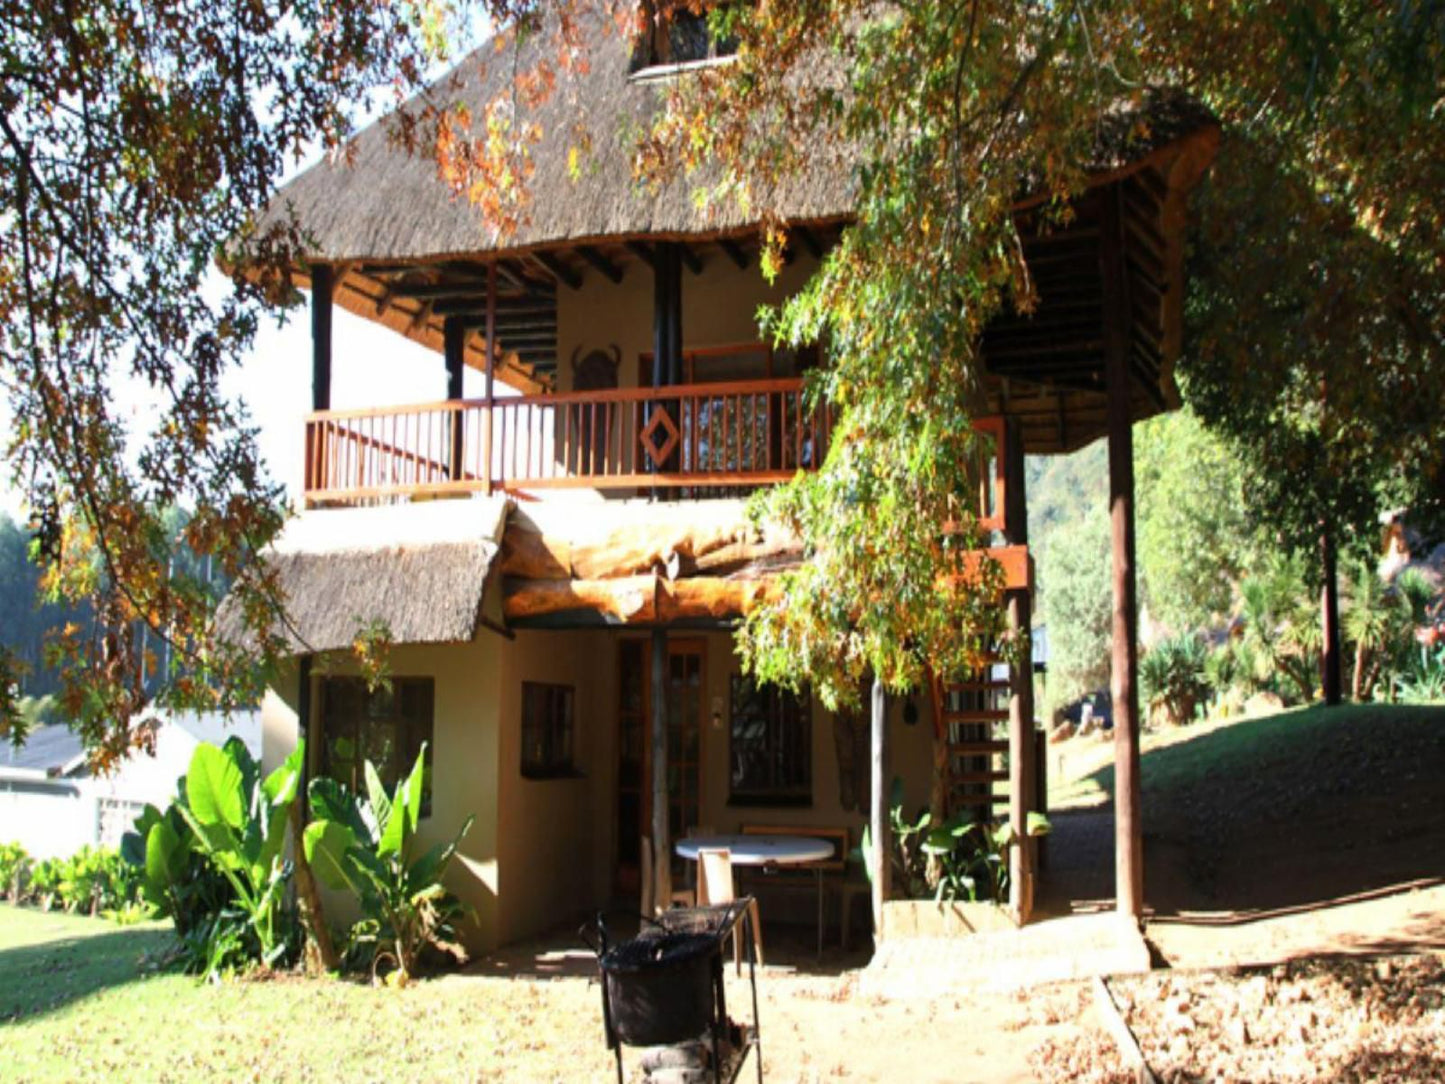 Emahlathini Farm Lodge Piet Retief Mpumalanga South Africa Building, Architecture, House